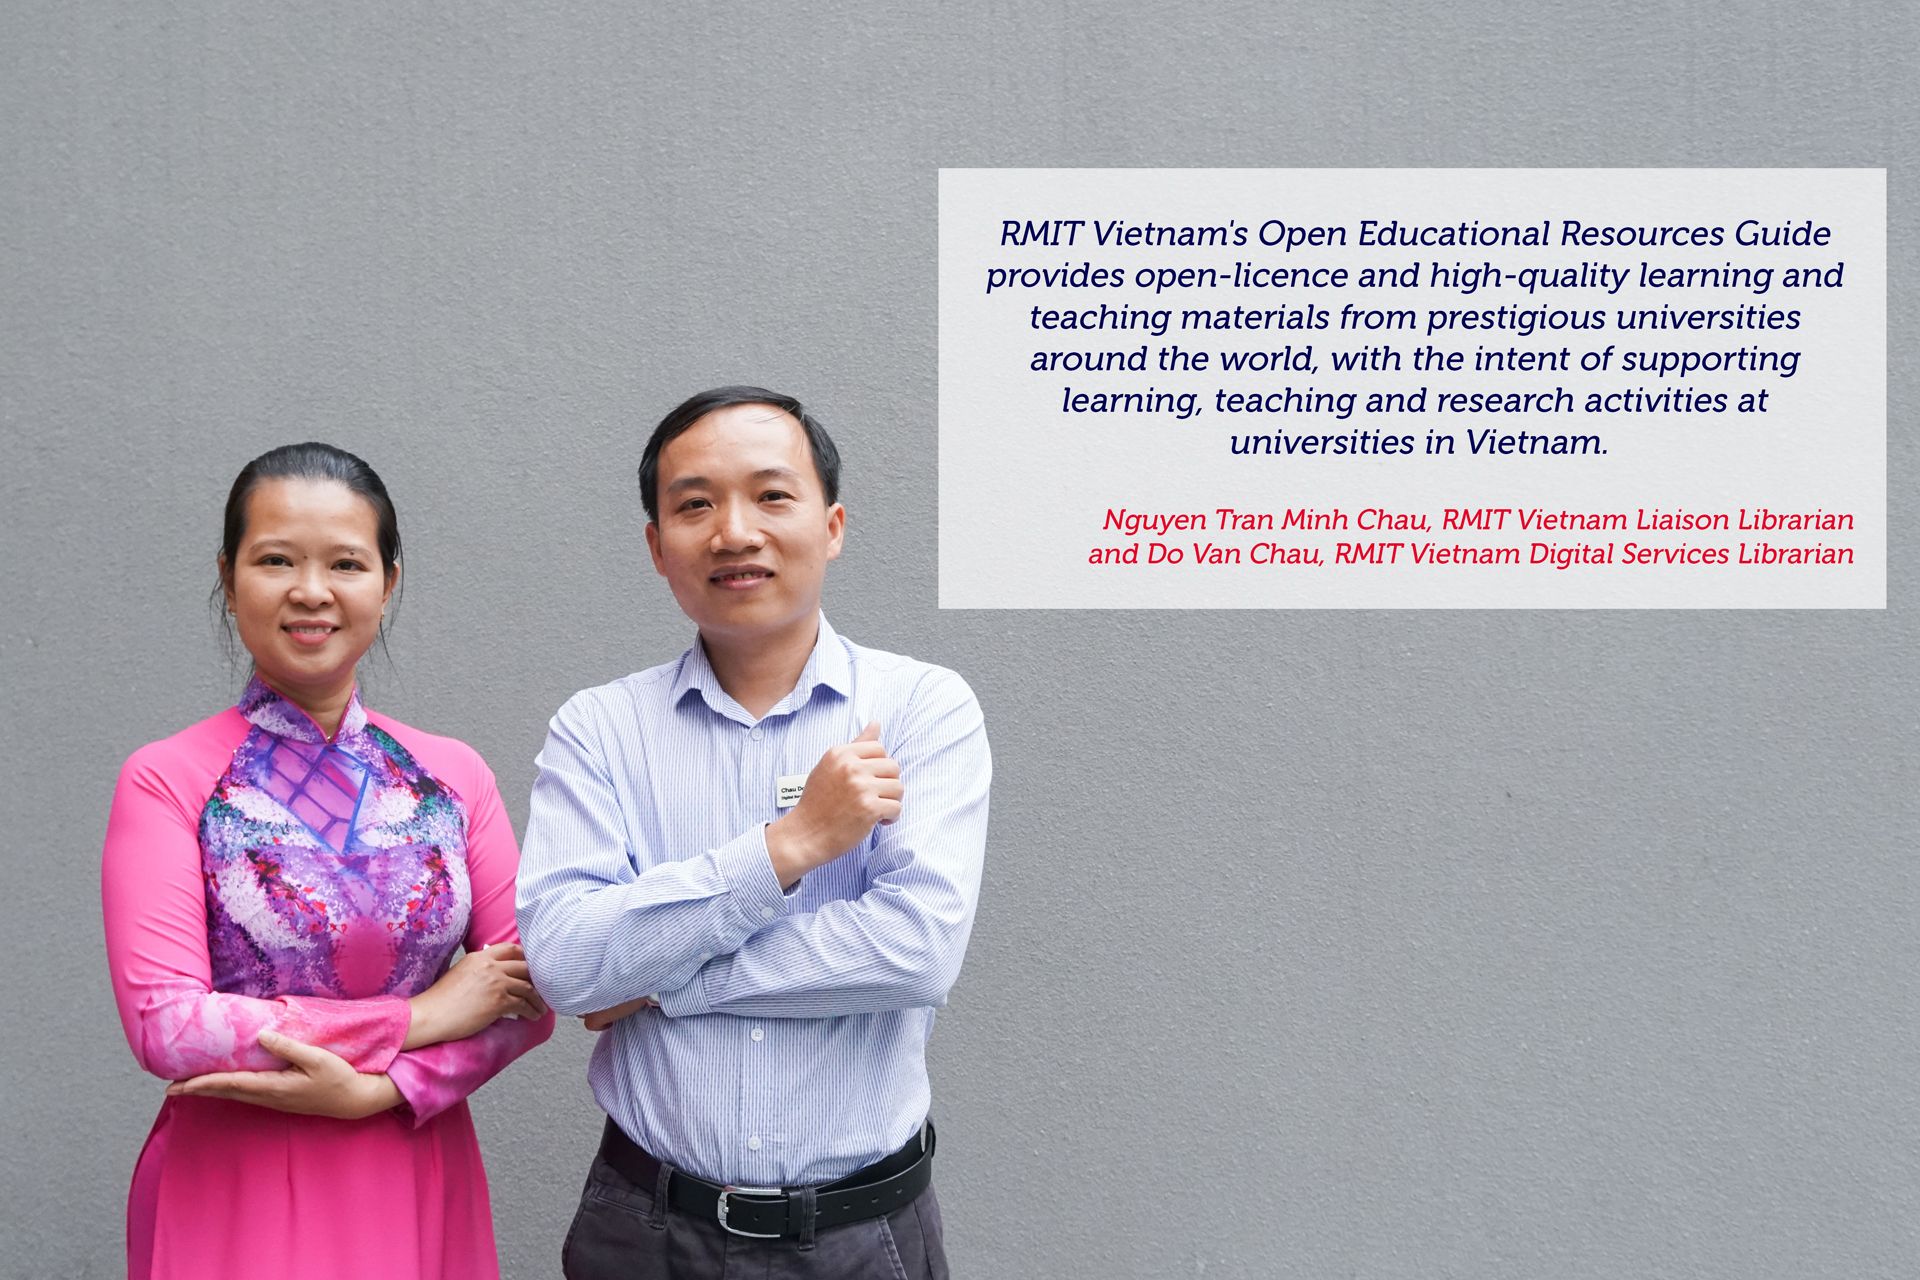 Do Van Chau (right), RMIT Vietnam Digital Services Librarian, and Nguyen Tran Minh Chau, RMIT Vietnam Liaison Librarian, introduced the University’s Open Educational Resources Guide.